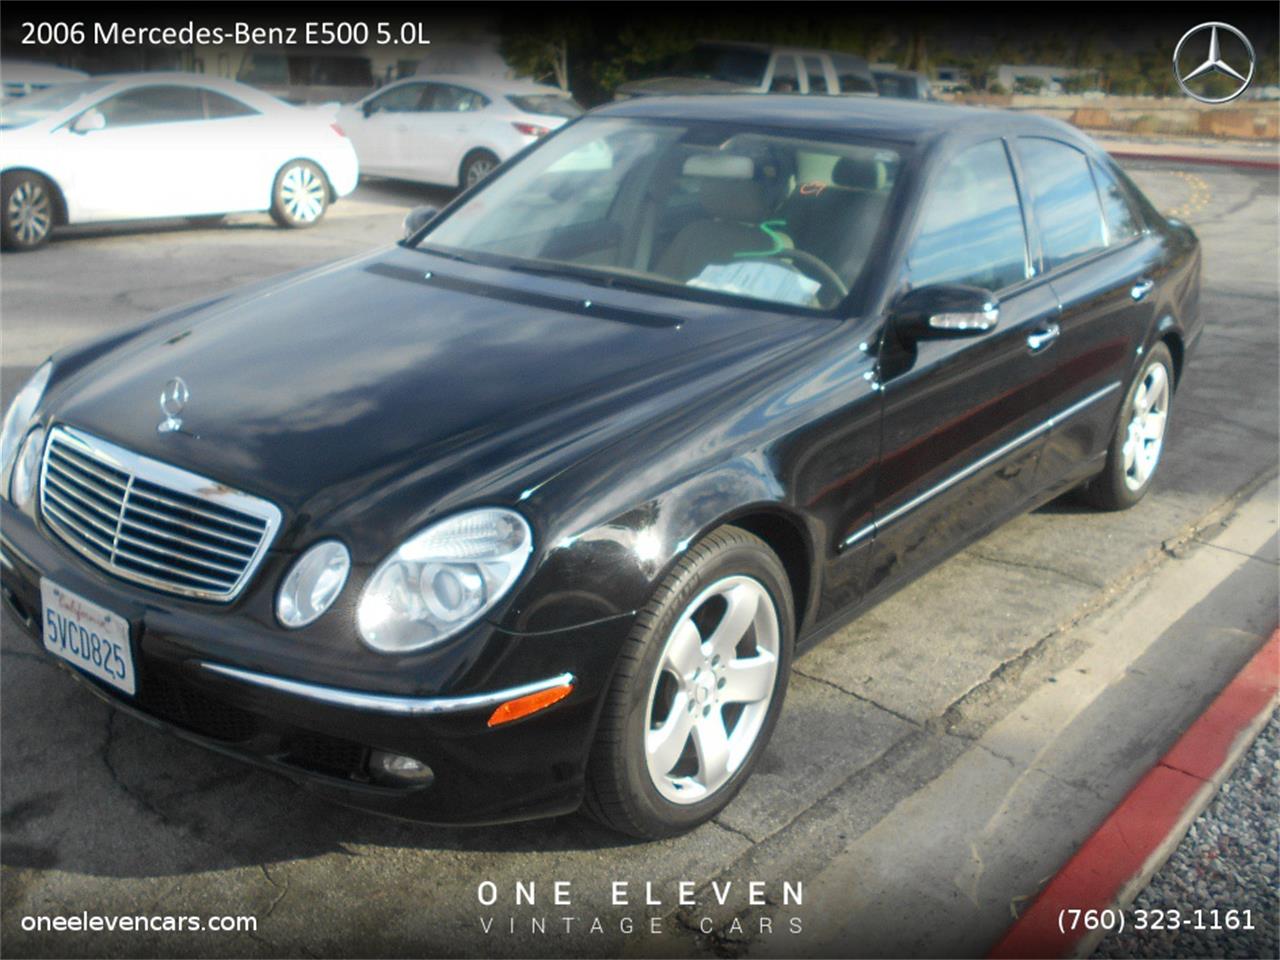 2006 Mercedes Benz E500 5 0l For Sale Classiccars Com Cc 928269